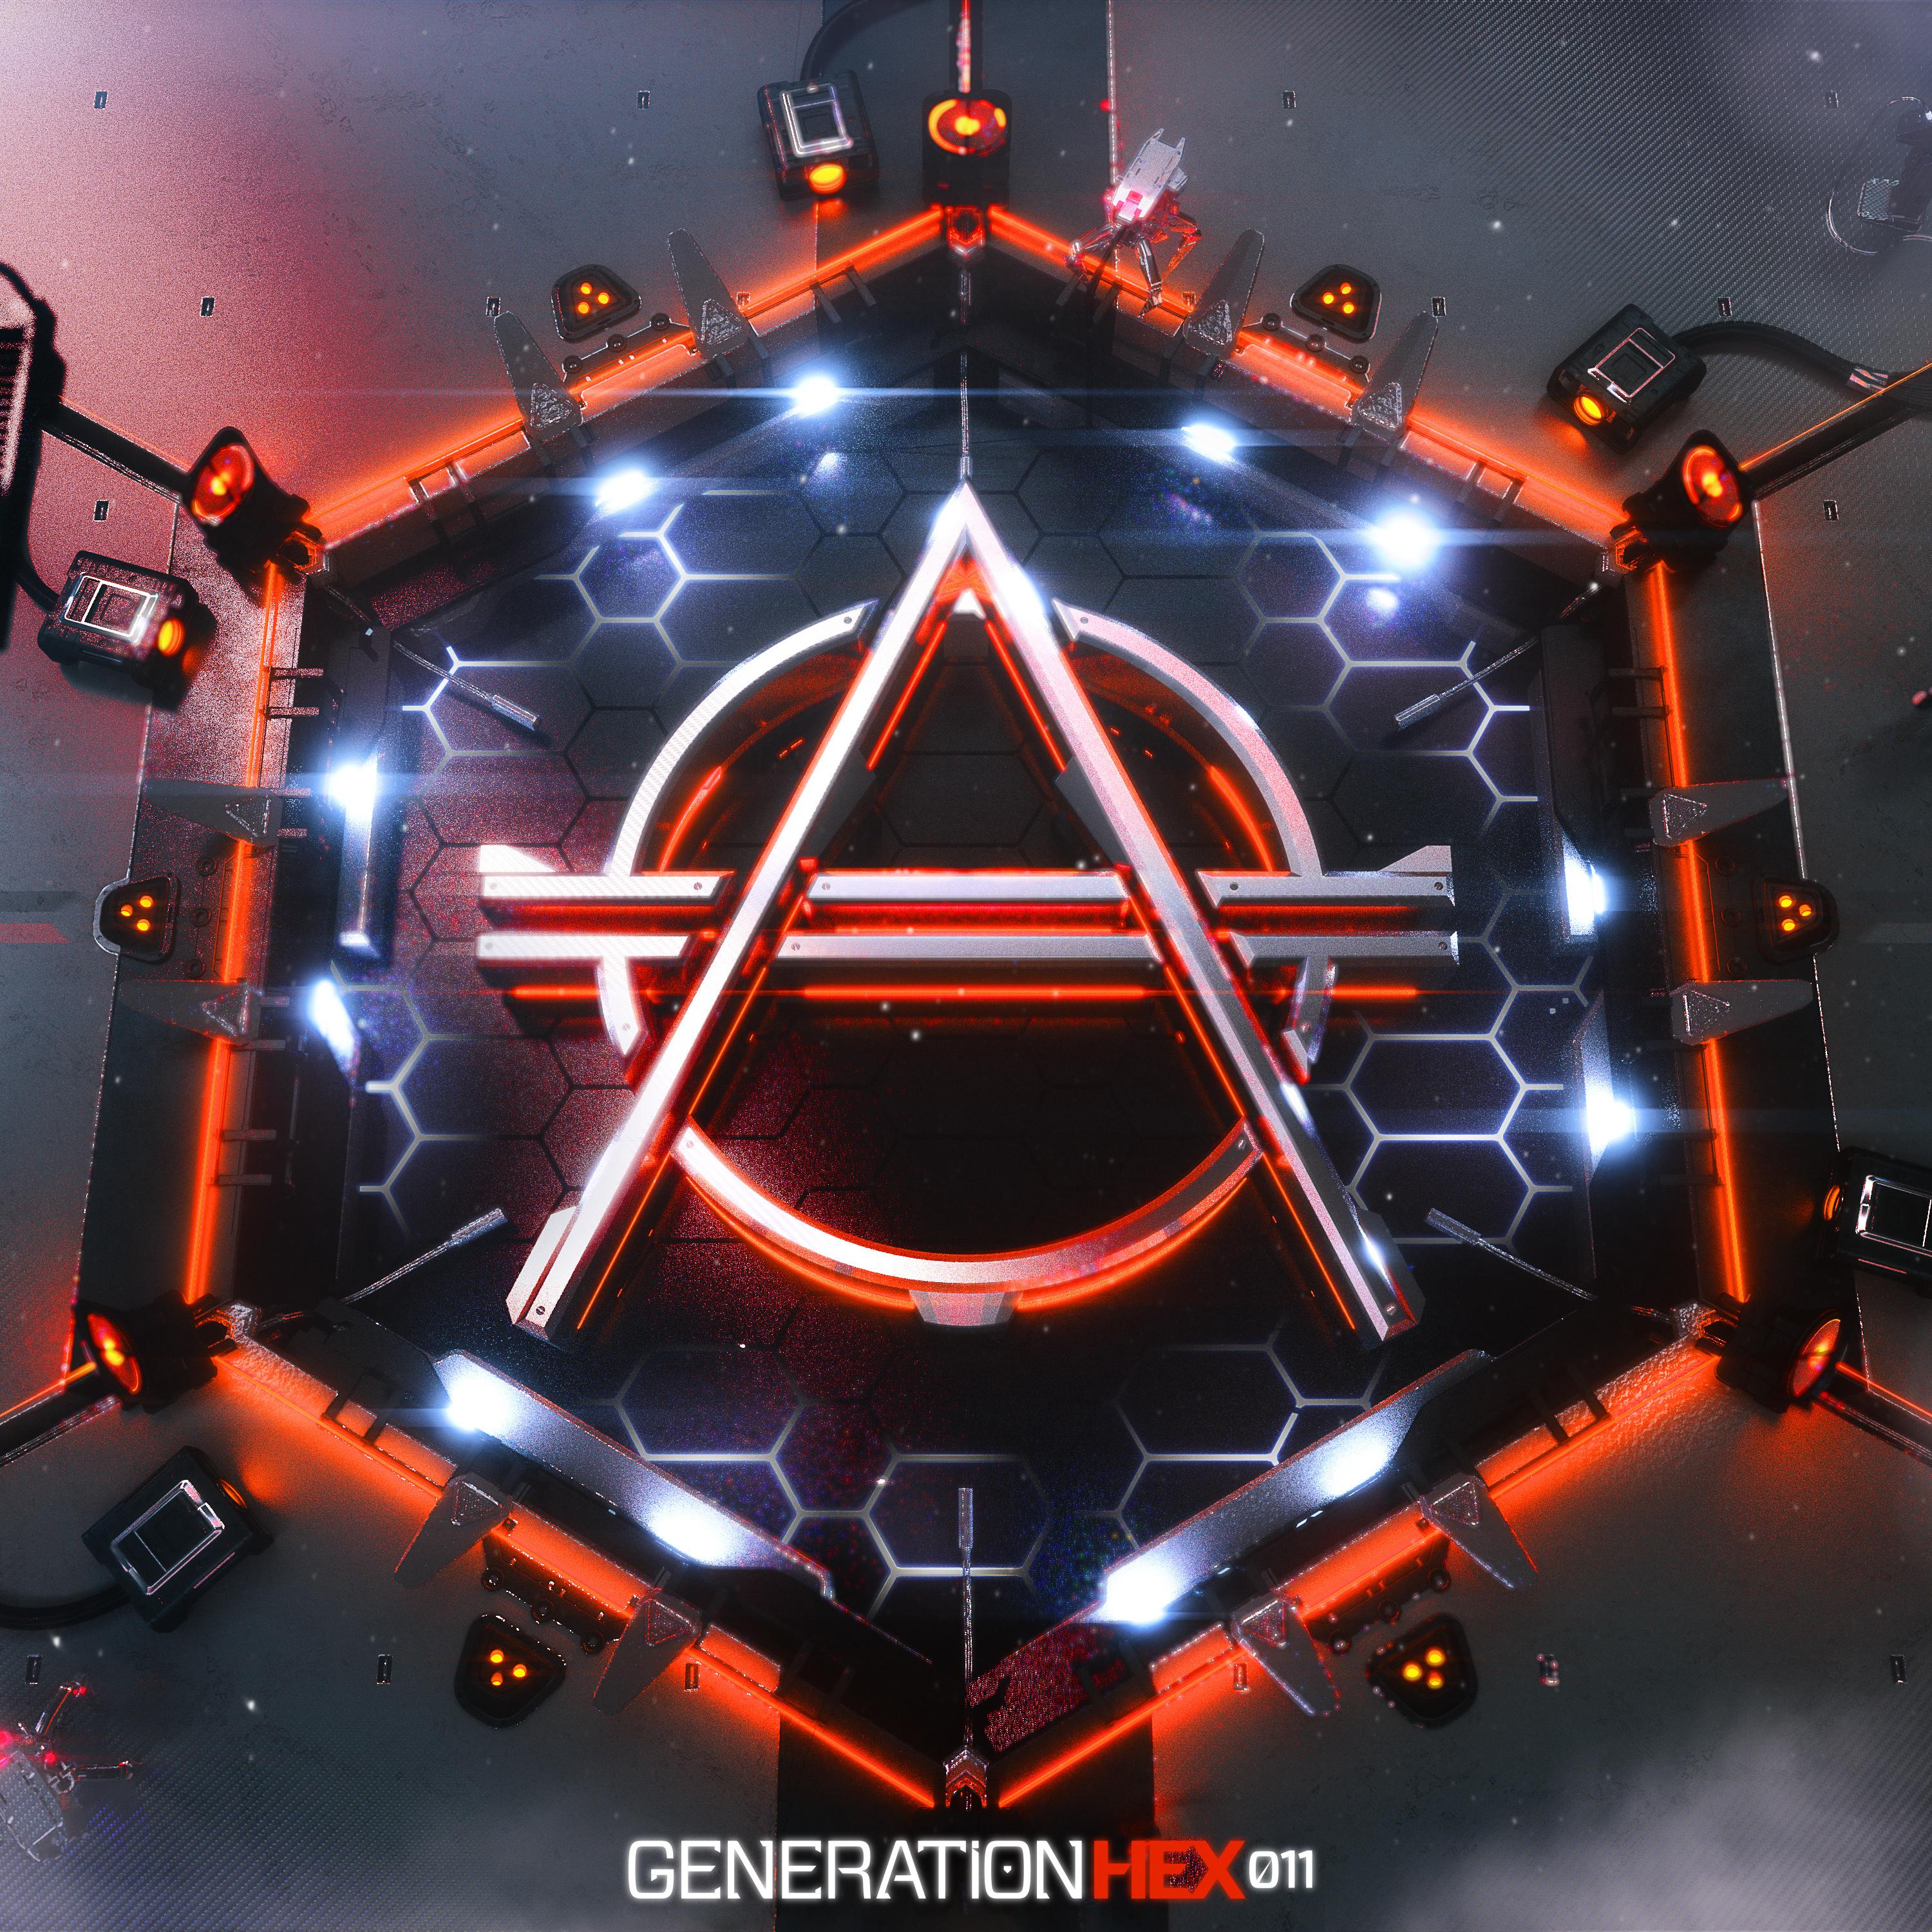 Generation Hex 011 EP